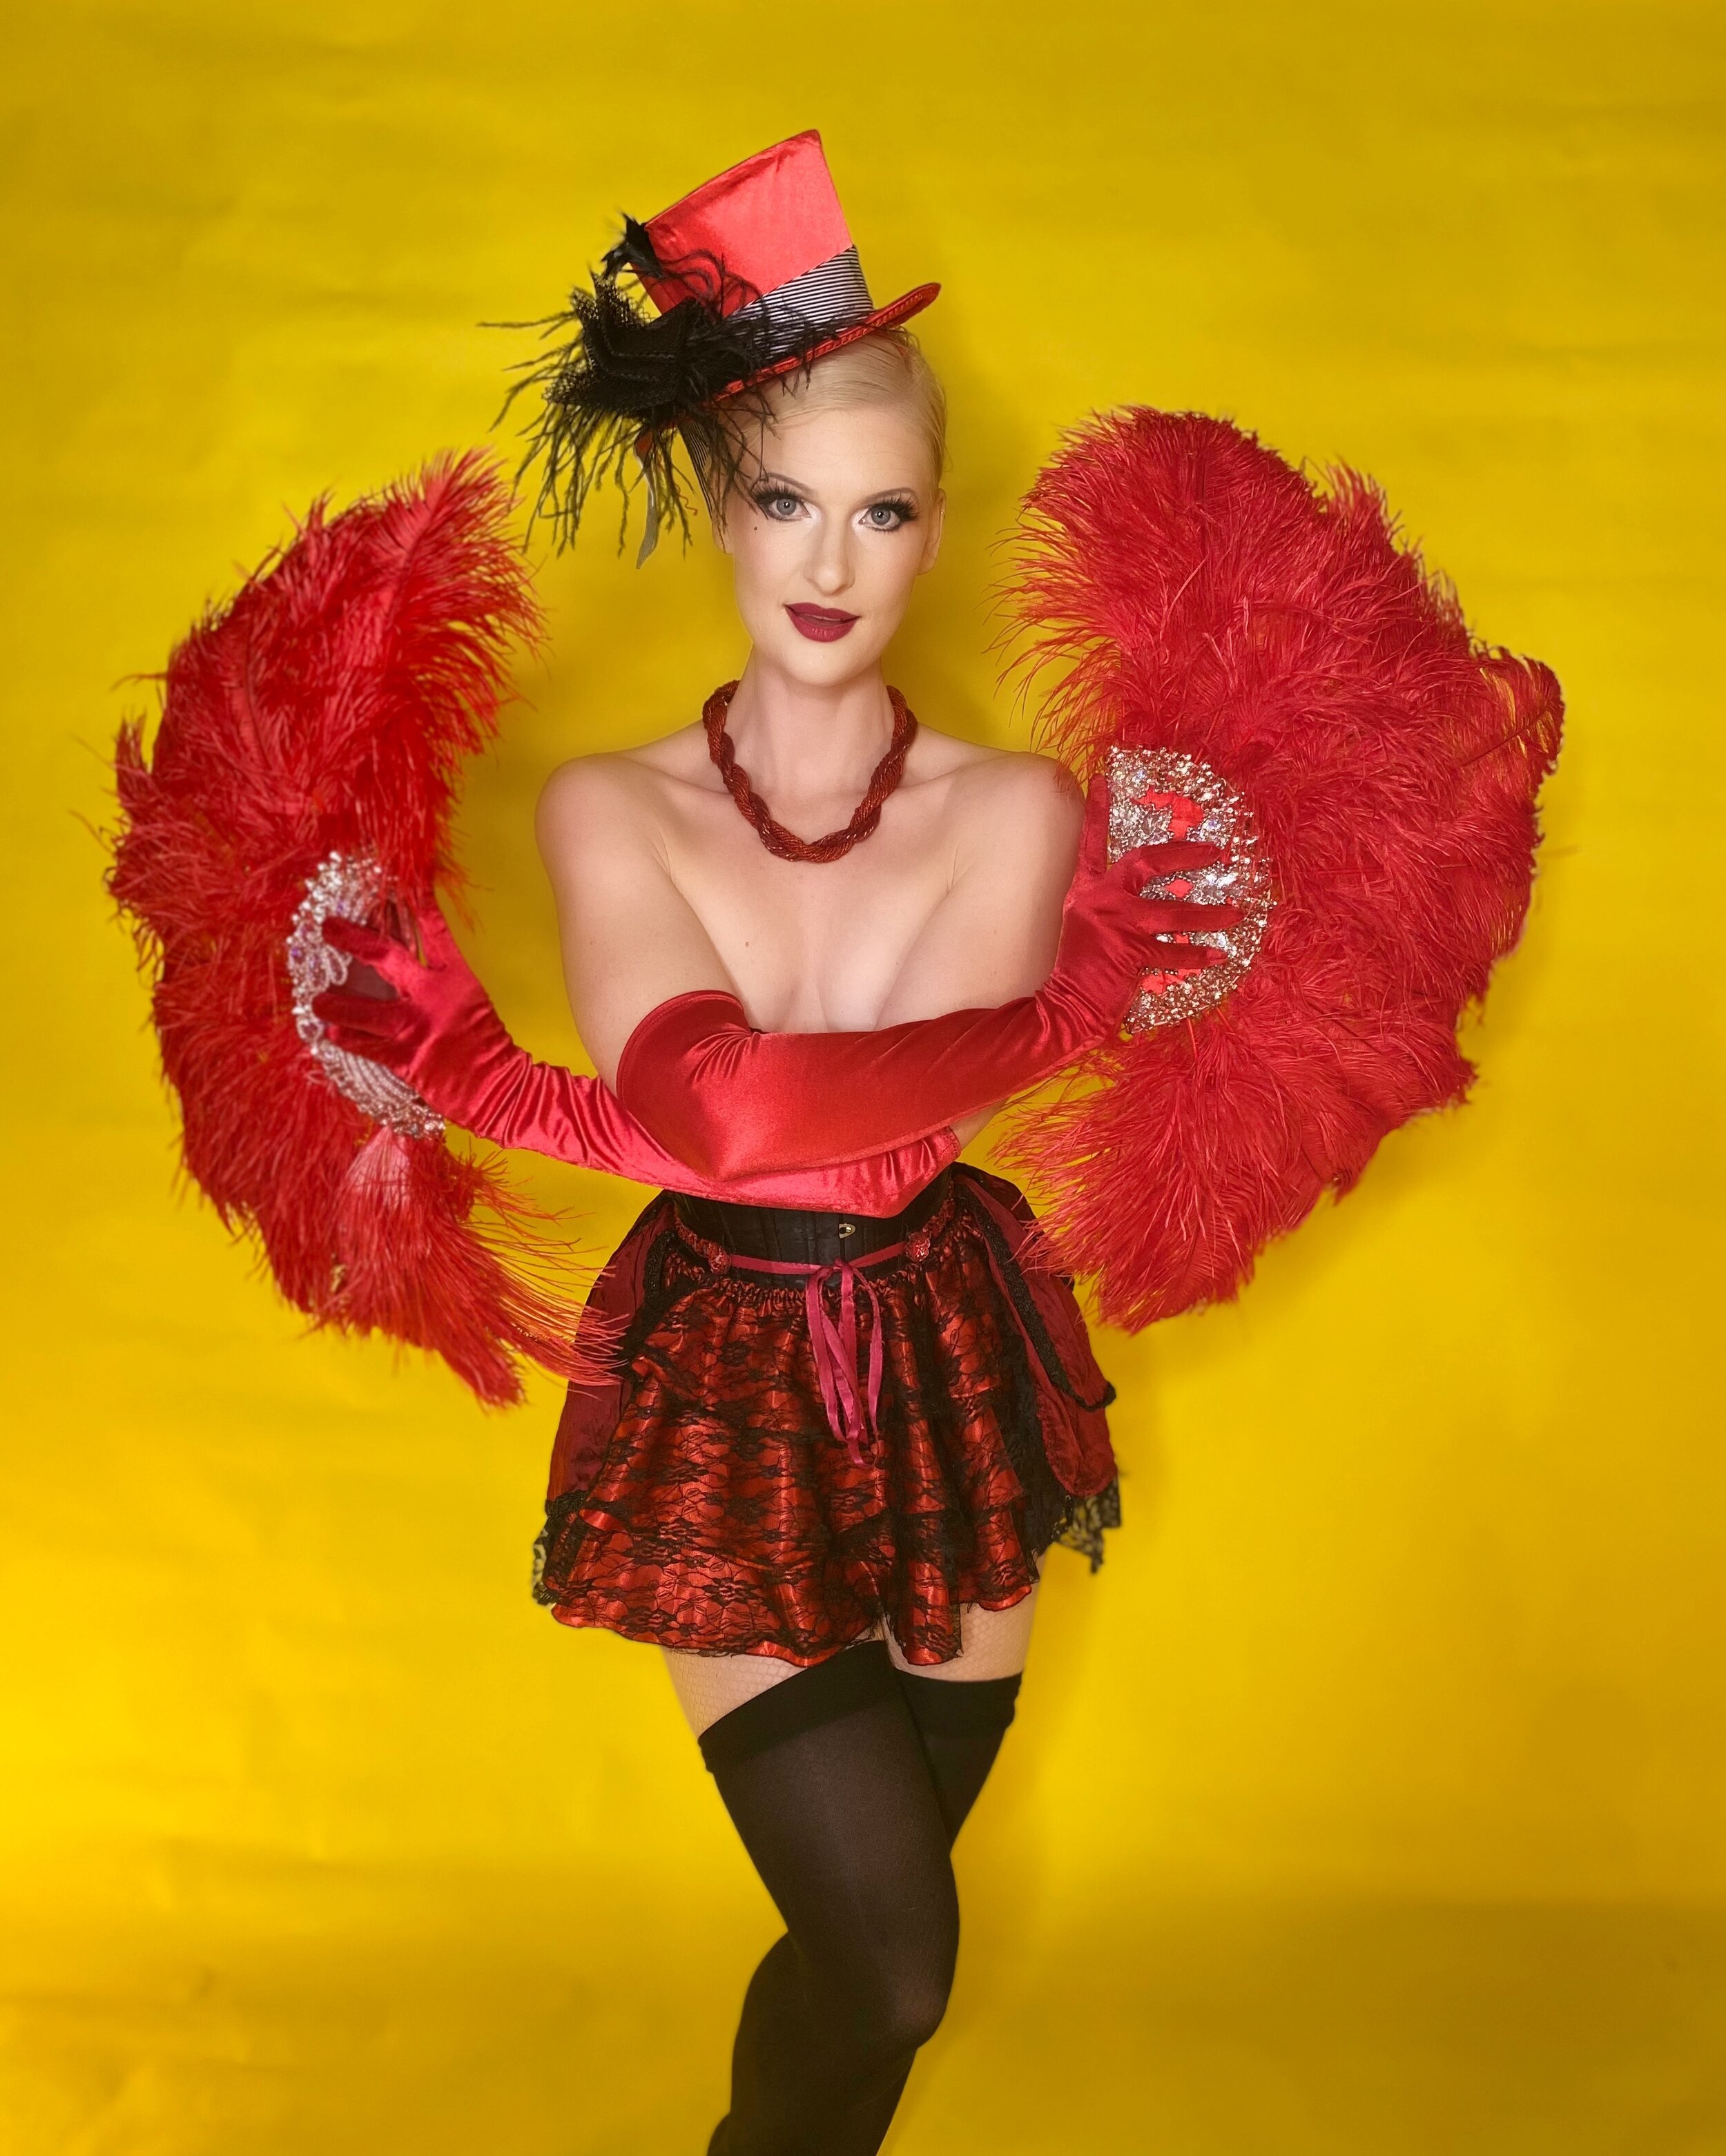 Costume Rental Store in Montreal — Arabesque Burlesque